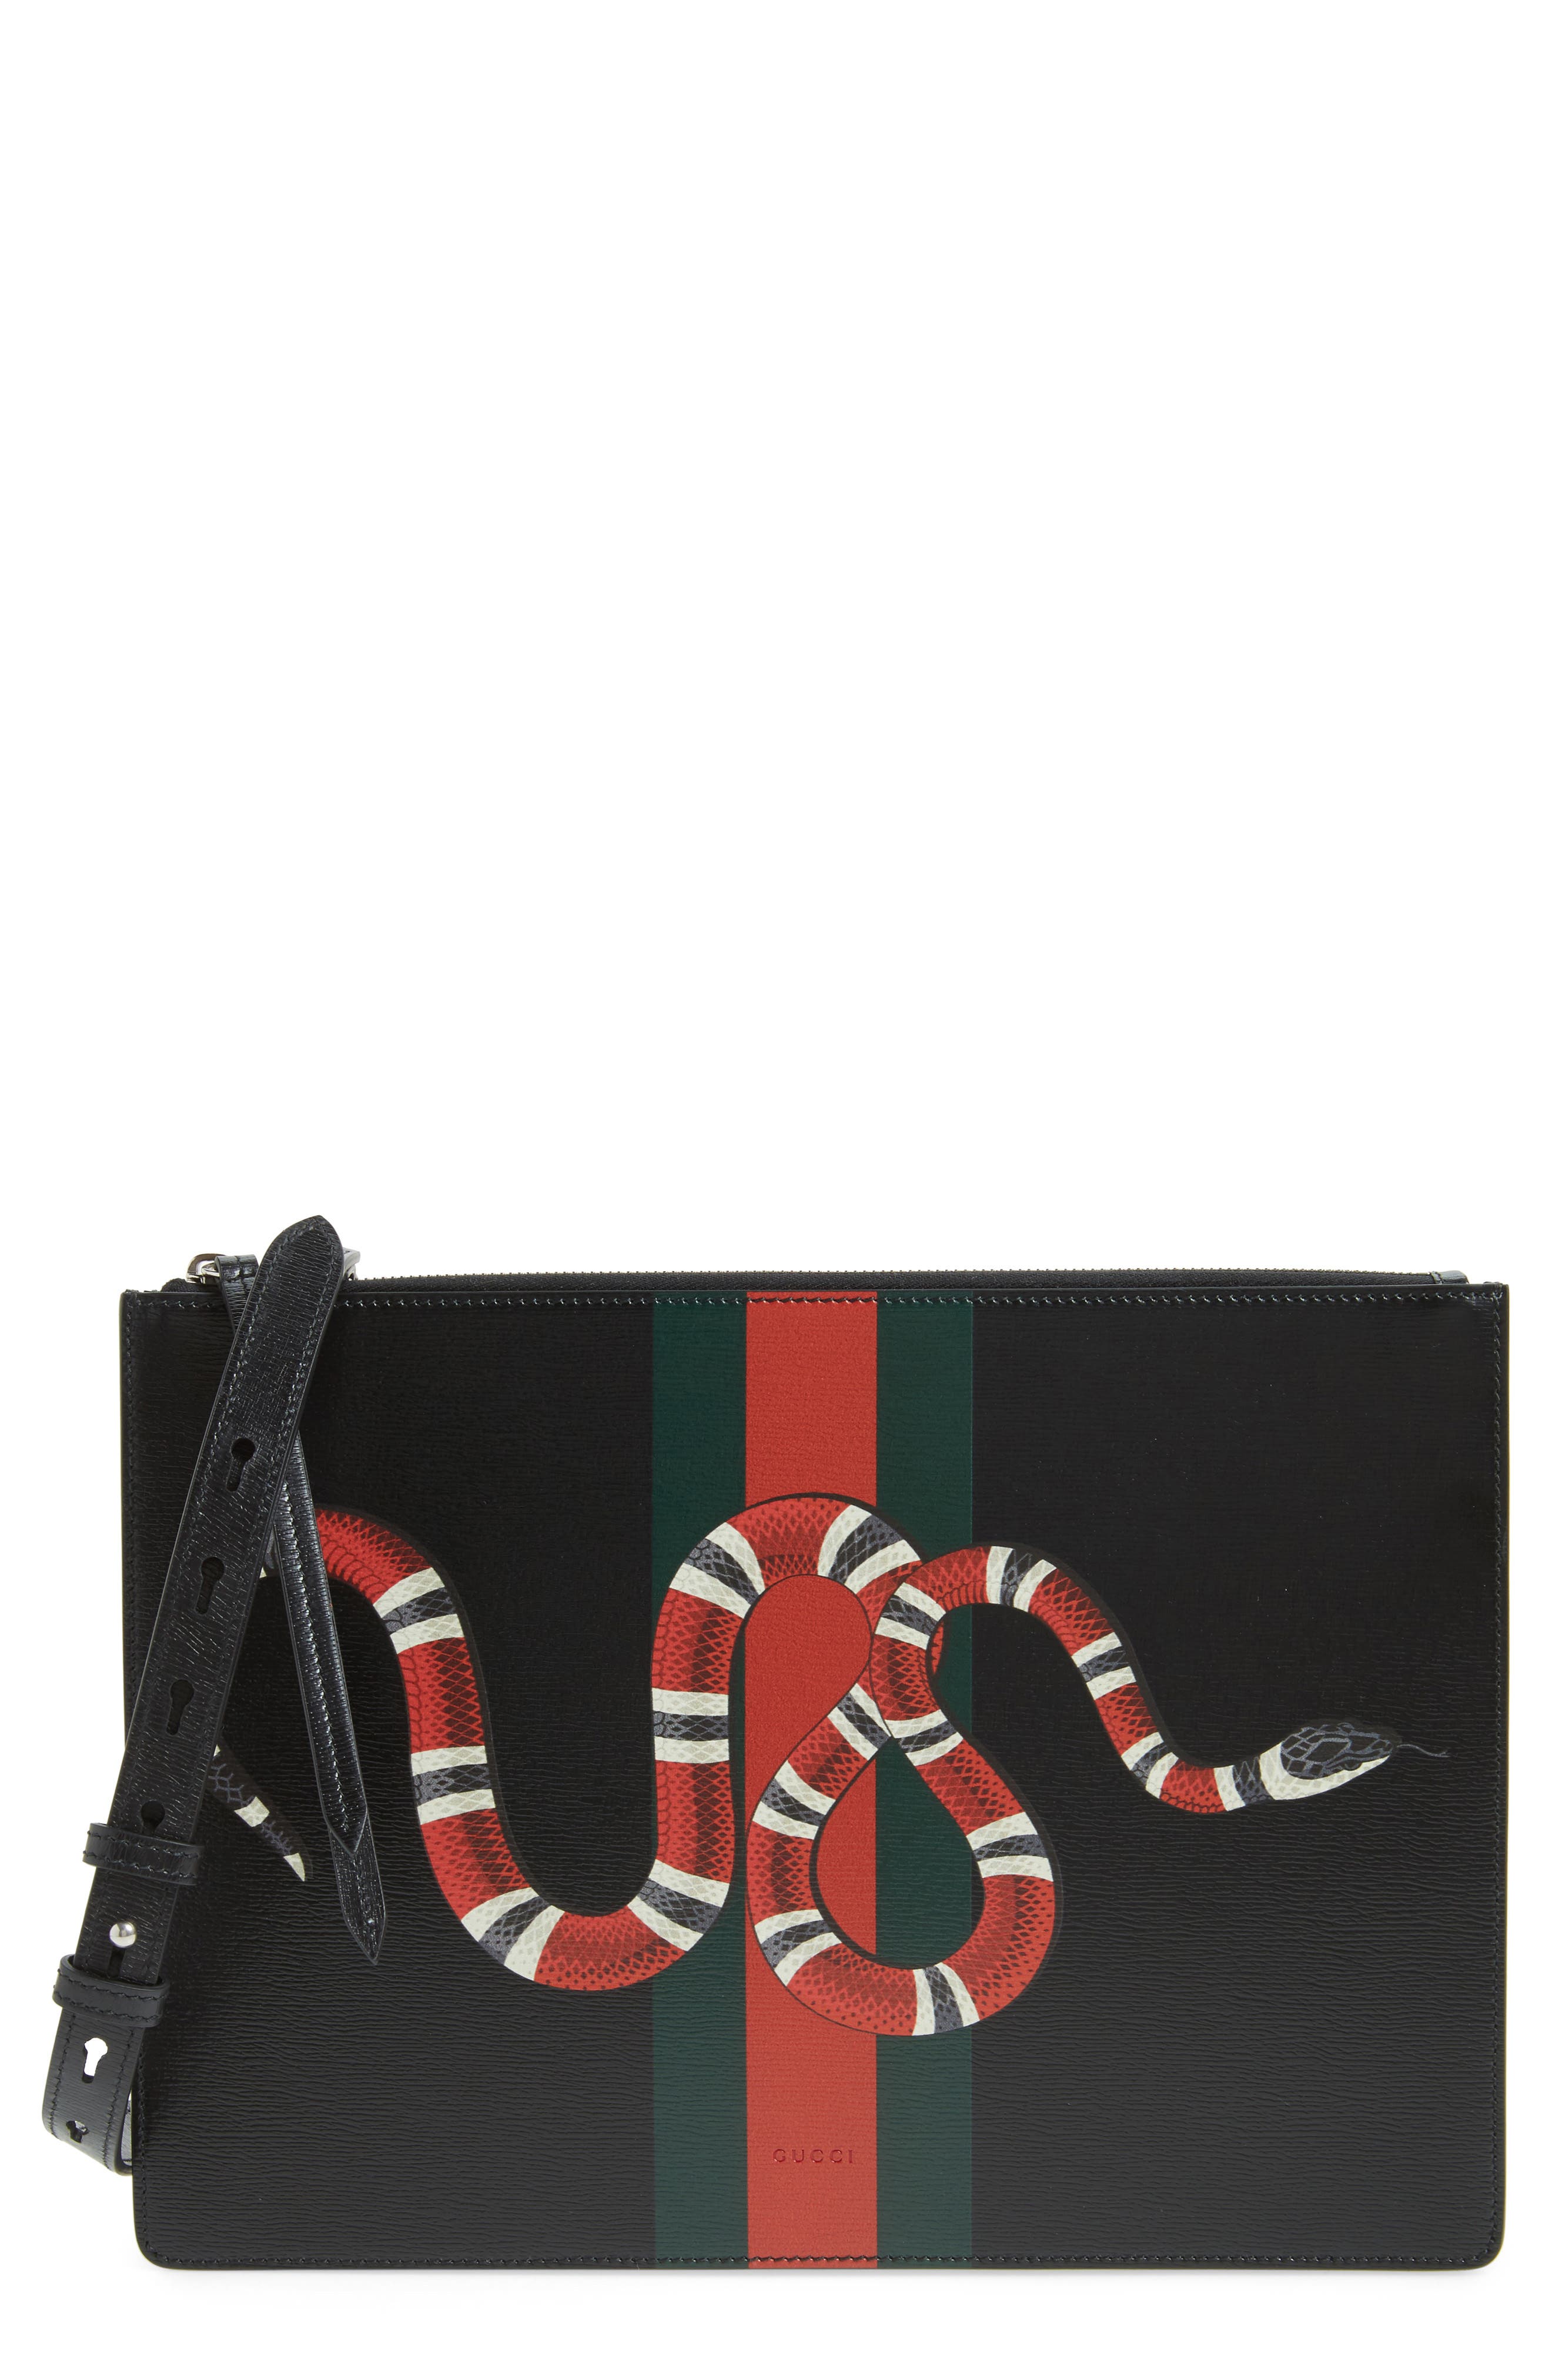 gucci snake leather bag